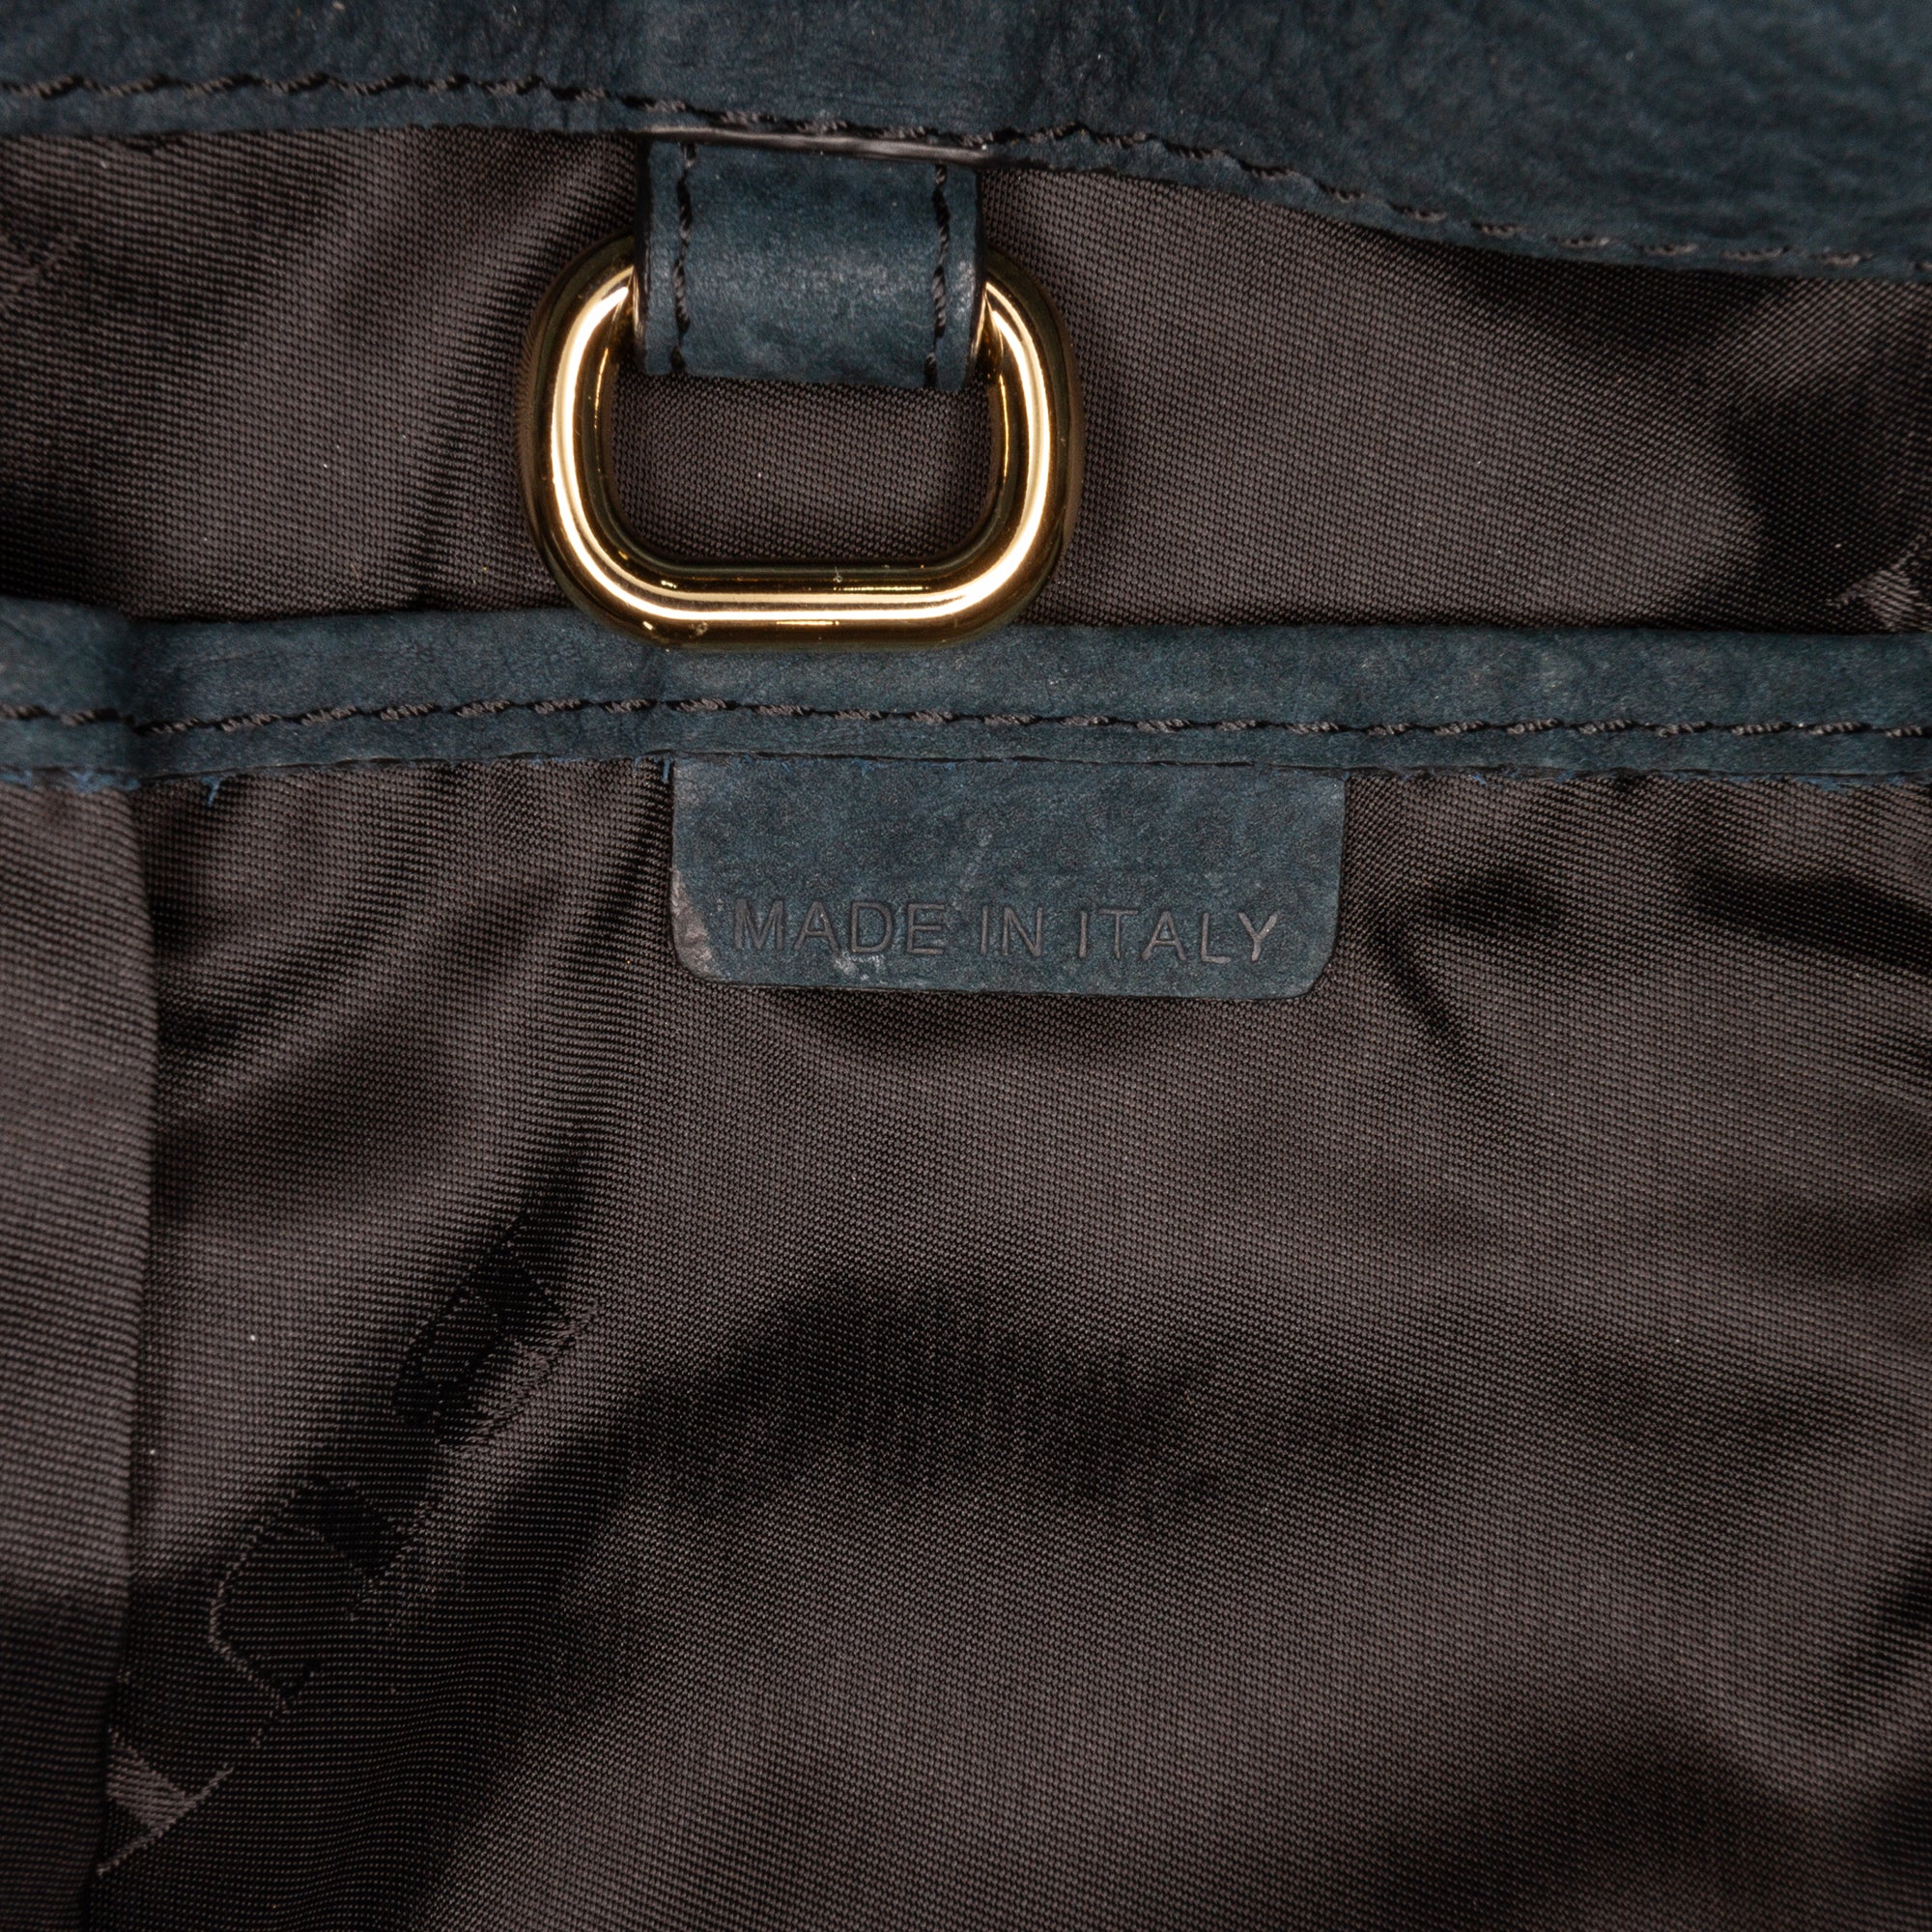 Blue Burberry Leather Satchel - Designer Revival